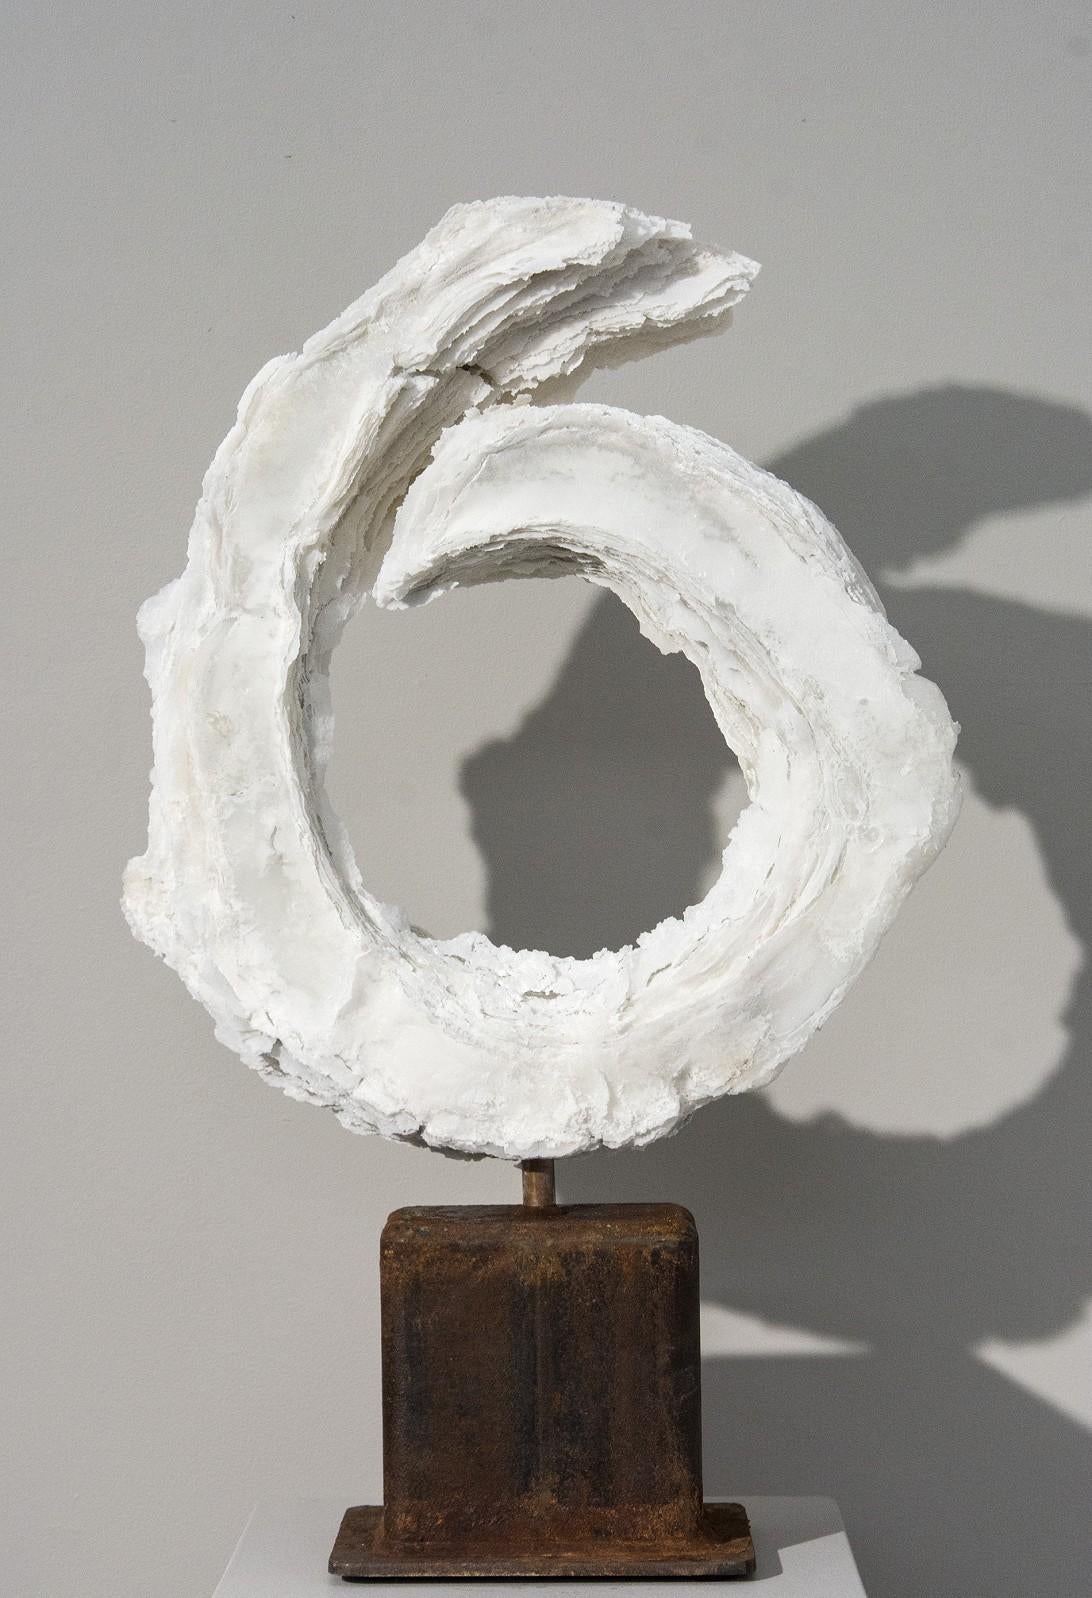 Cheryl Wilson Smith Abstract Sculpture - Flourish I - white, textured, abstract, modernist, layered glass frit sculpture